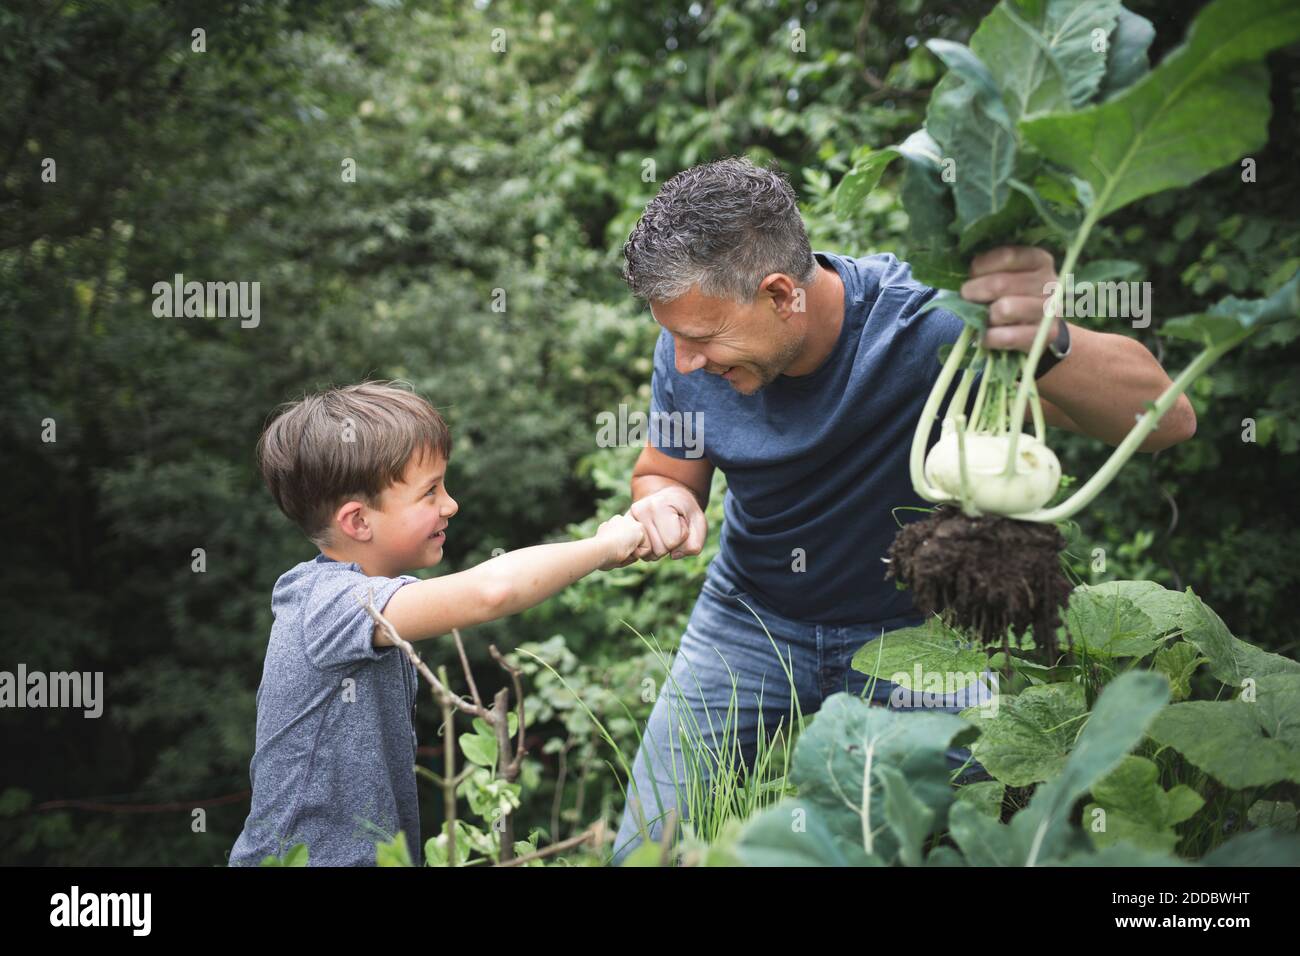 Smiling man holding kohlrabi while giving fist bump to son in garden Stock Photo